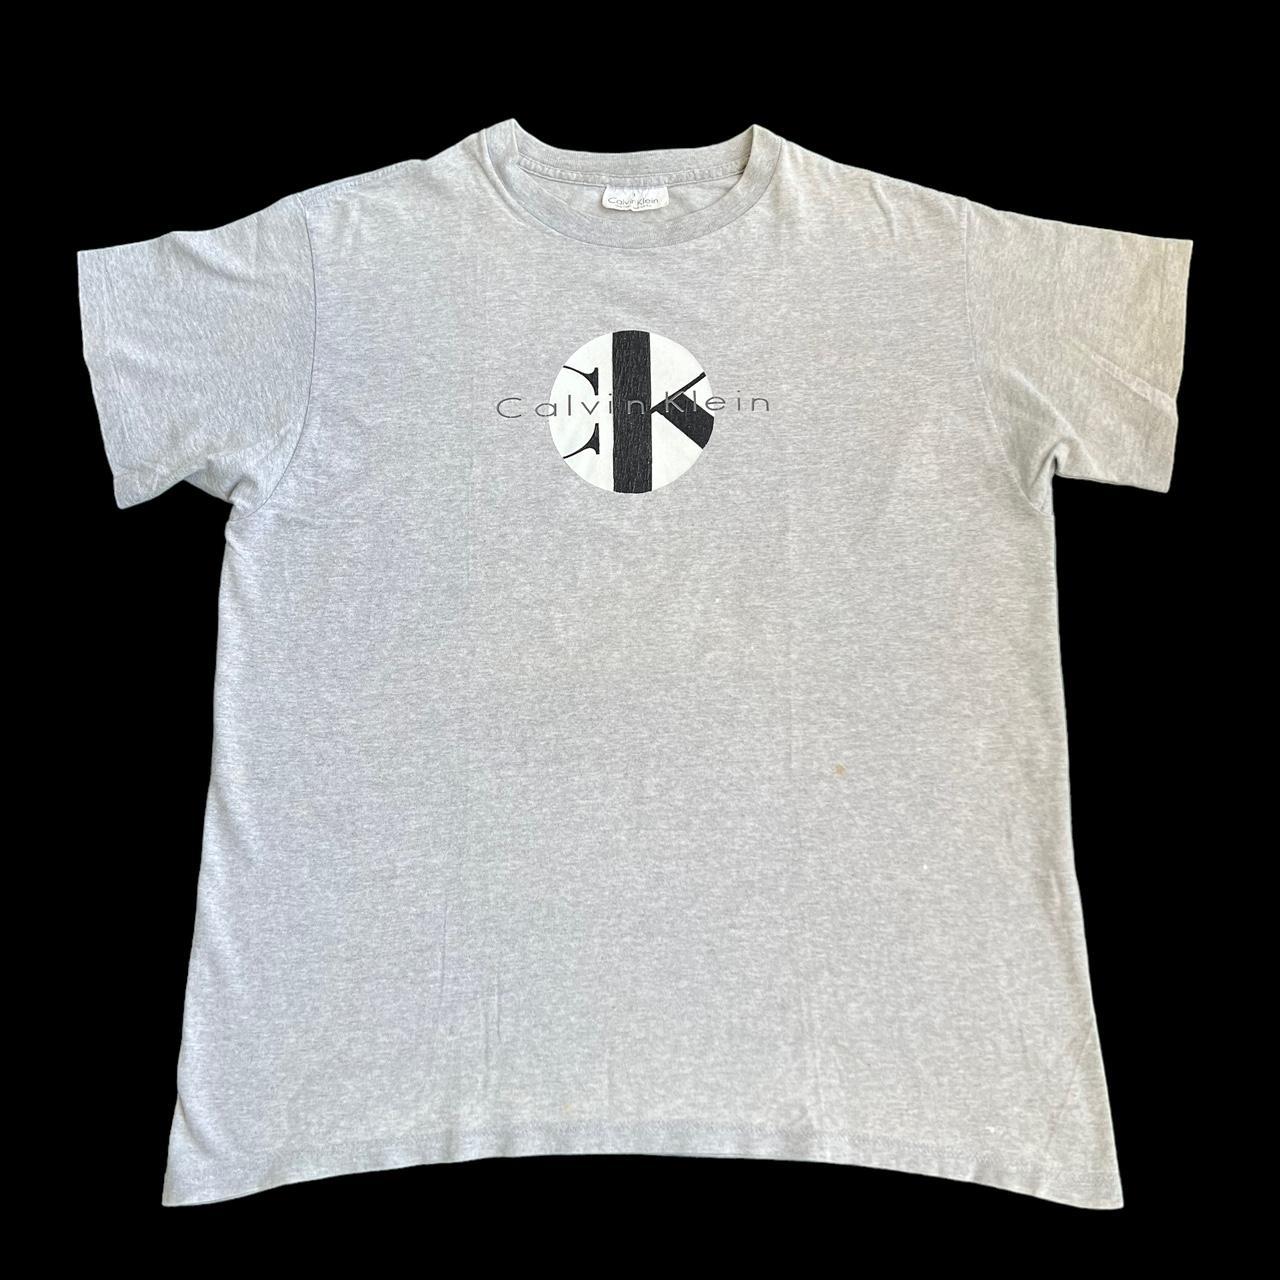 crew Large... - USA Vintage Depop made CK Klein shirt Calvin t